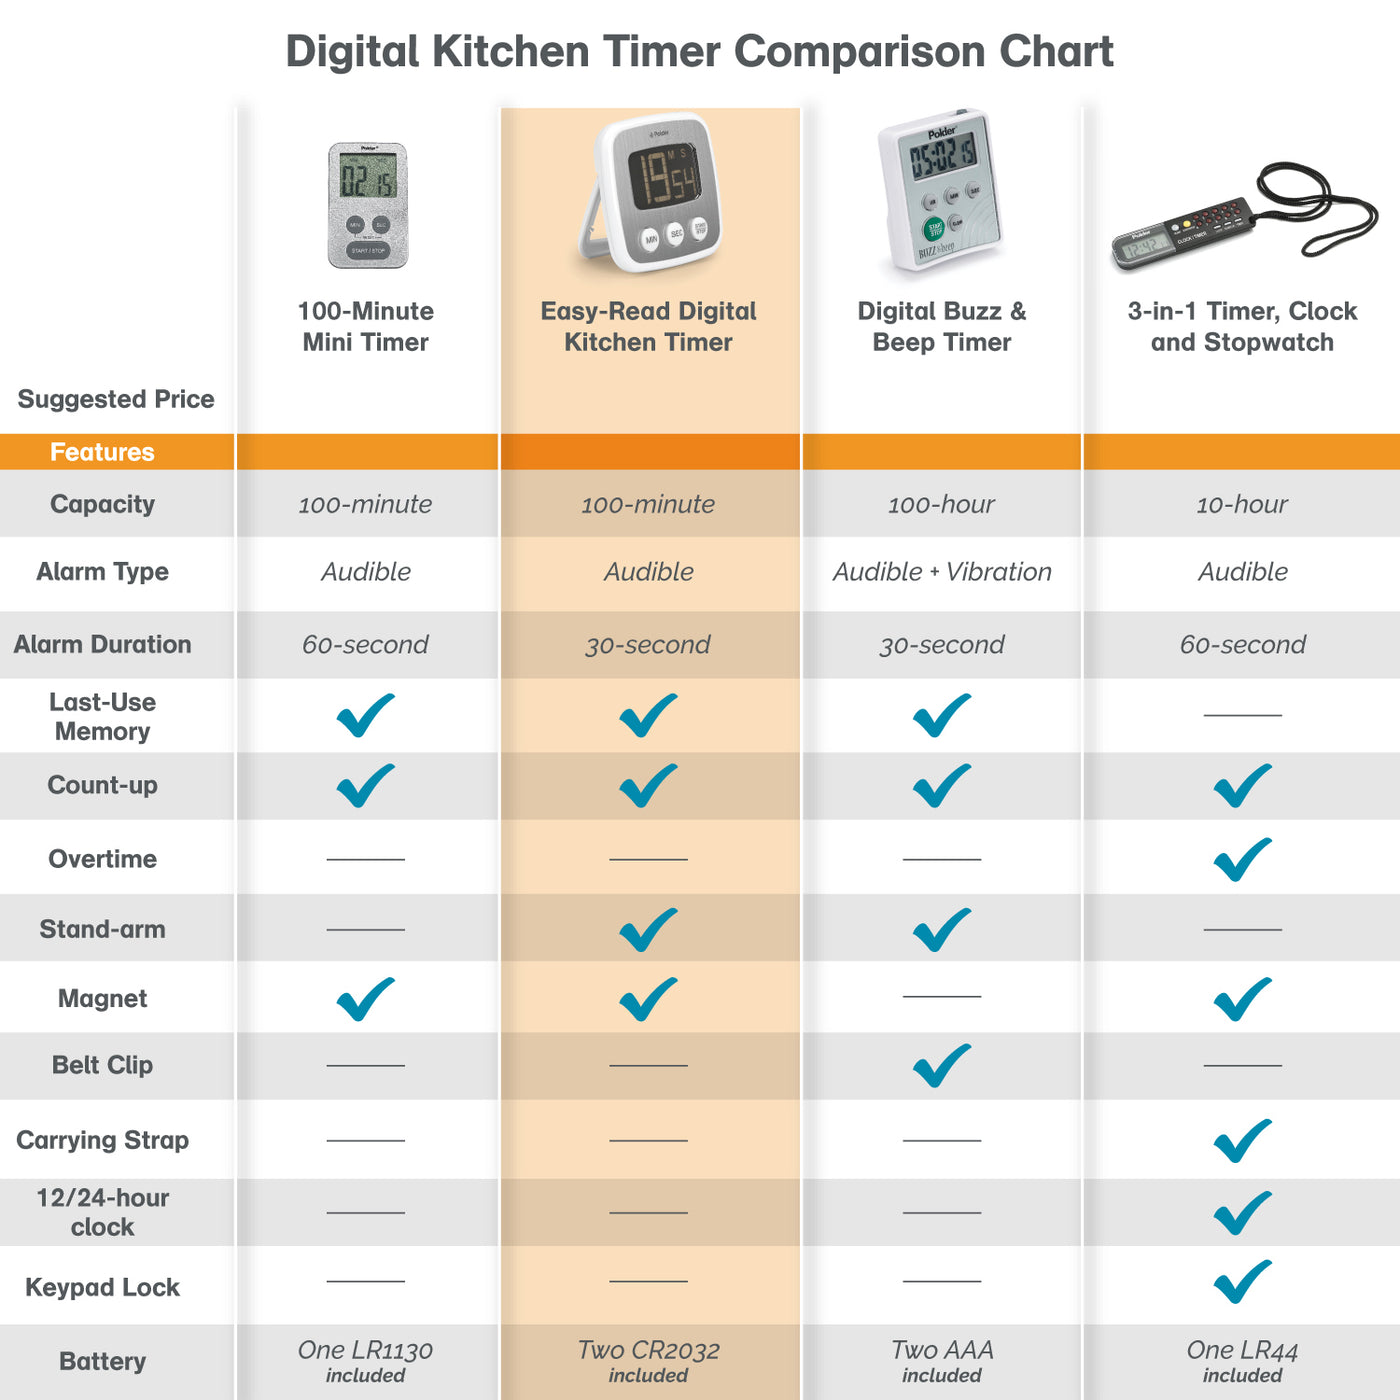 Easy-Read Digital Kitchen Timer